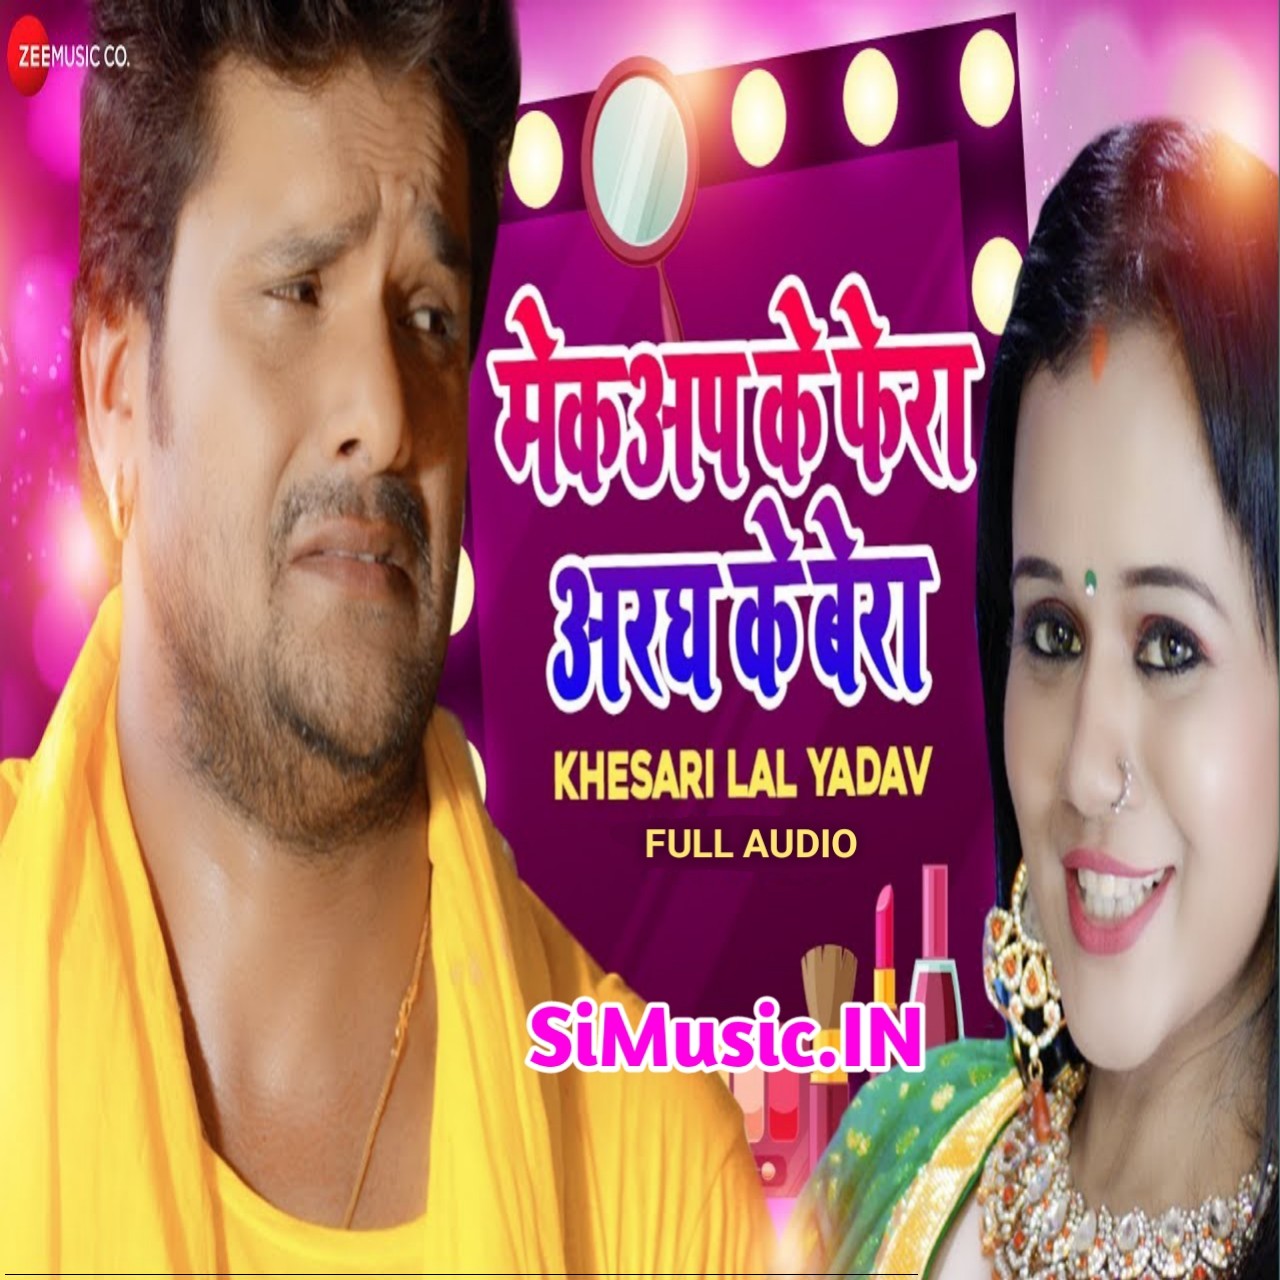 Makeup Ke Fera Aragh Ke Bera (Khesari Lal Yadav, Priyanka Singh) 2019 Mp3 Songs